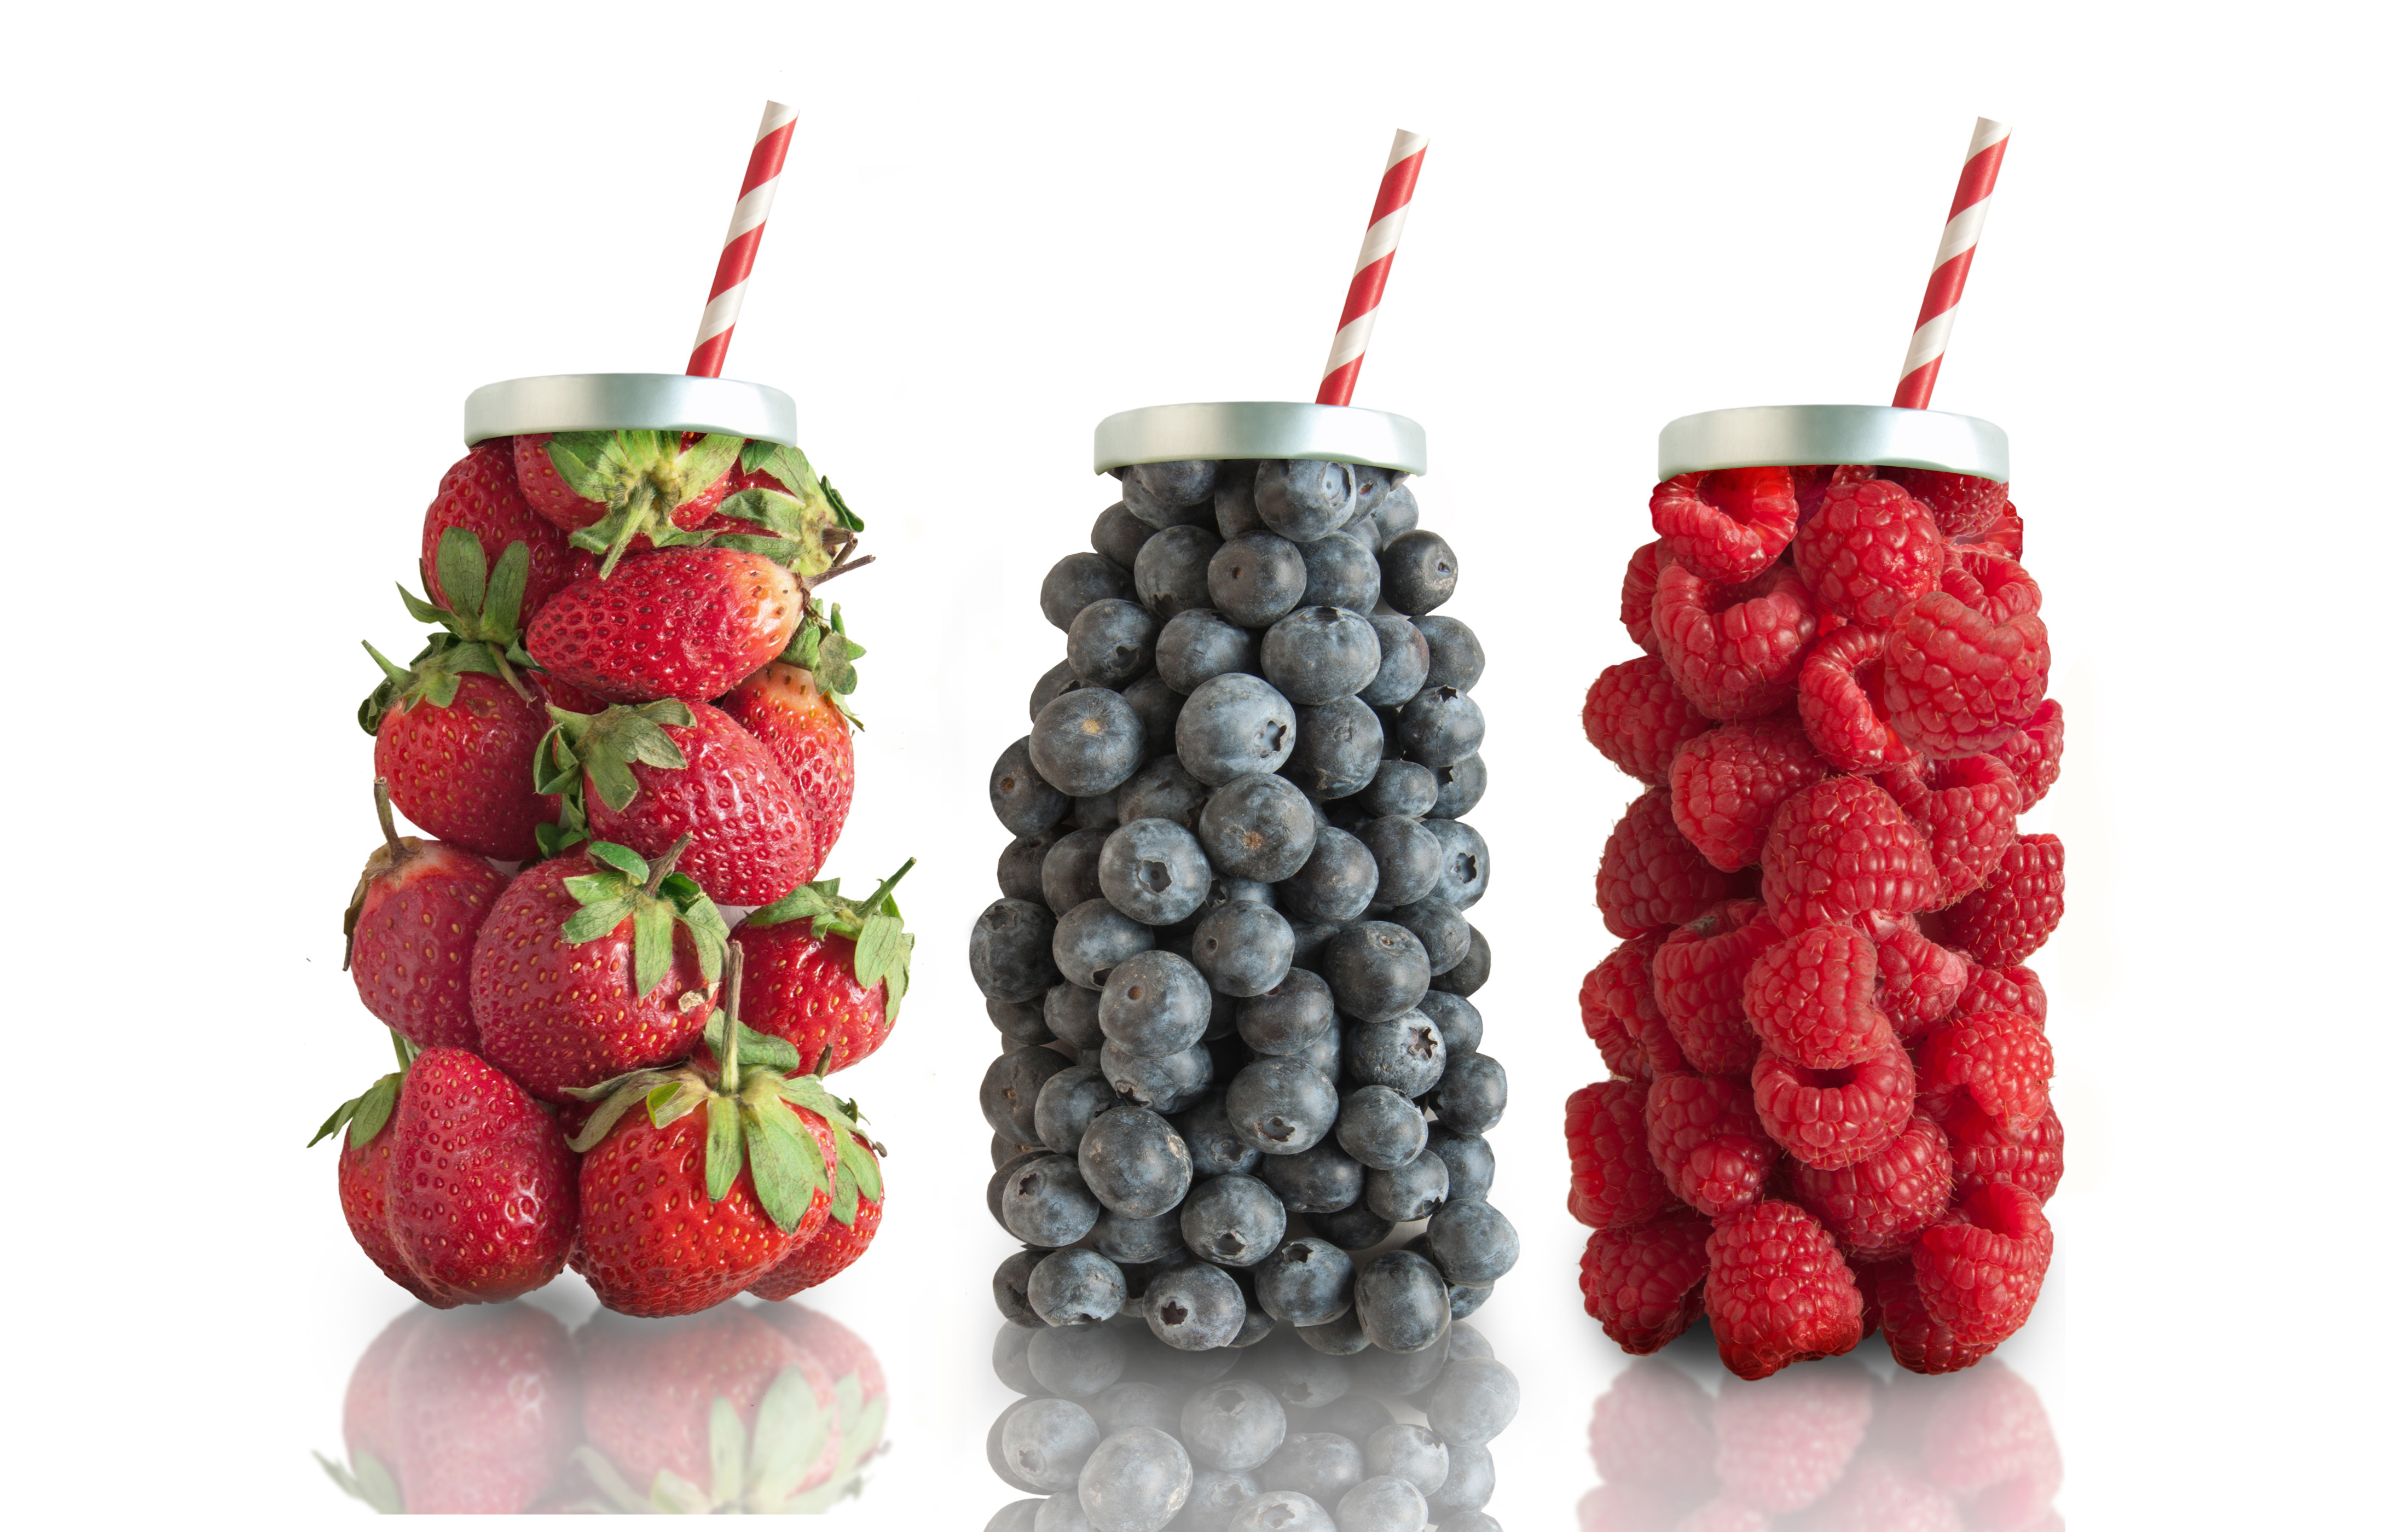 https://www.foodnavigator.com/var/wrbm_gb_food_pharma/storage/images/publications/food-beverage-nutrition/foodnavigator.com/news/science/sugars-reduced-in-berry-fruit-juice-by-up-to-50-using-sugar-reducing-beads/16311400-1-eng-GB/Sugars-reduced-in-berry-fruit-juice-by-up-to-50-using-sugar-reducing-beads.jpg